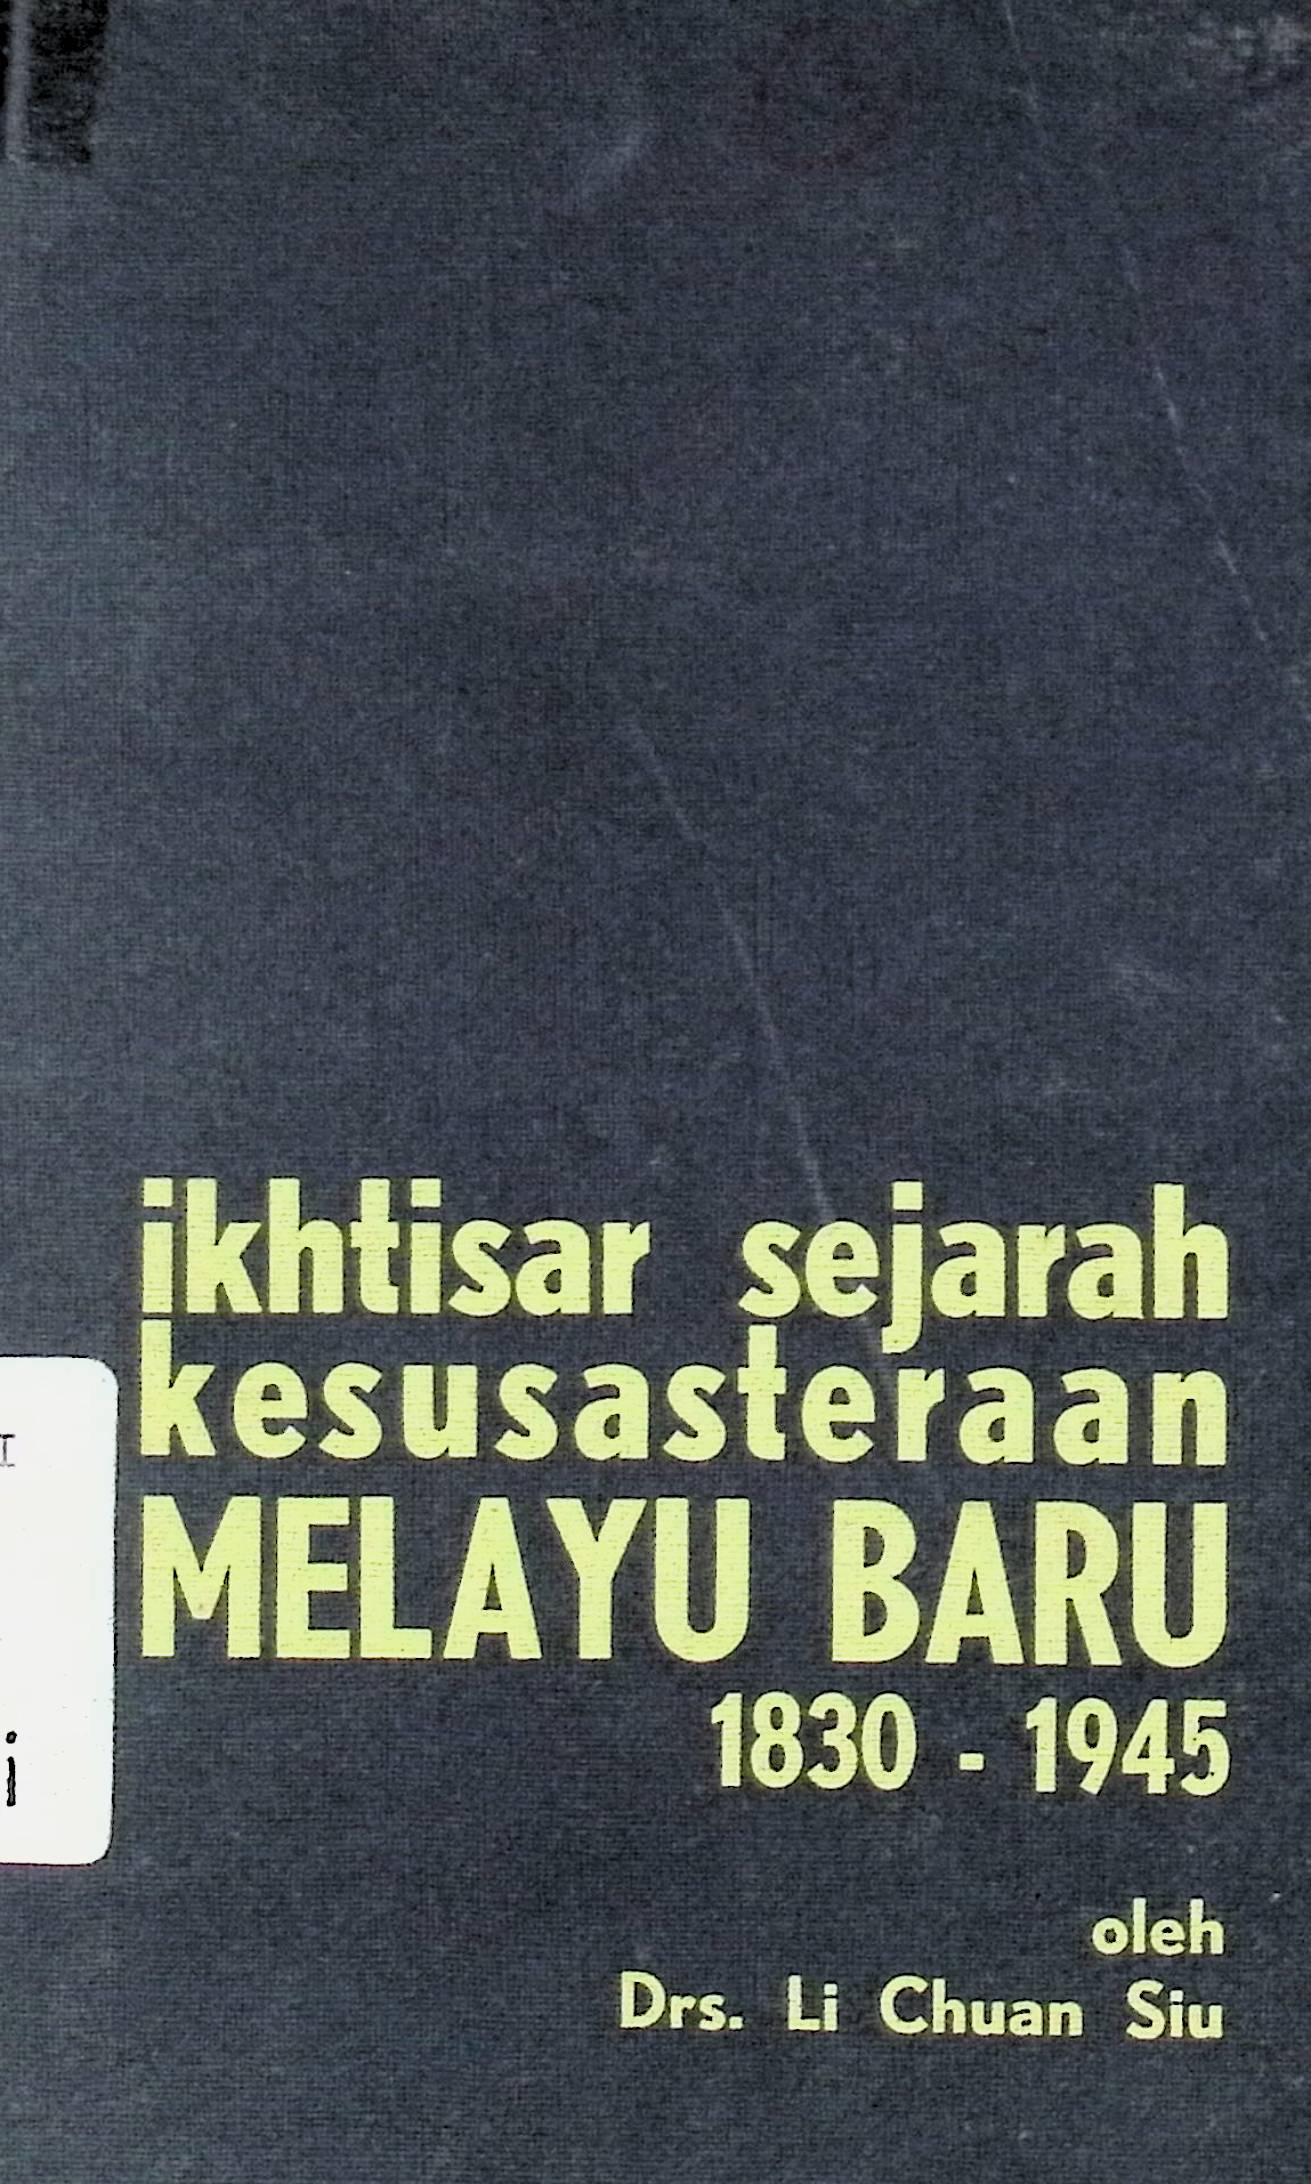 Ikhtisar sejarah kesusasteraan Melayu Baru 1830-1946